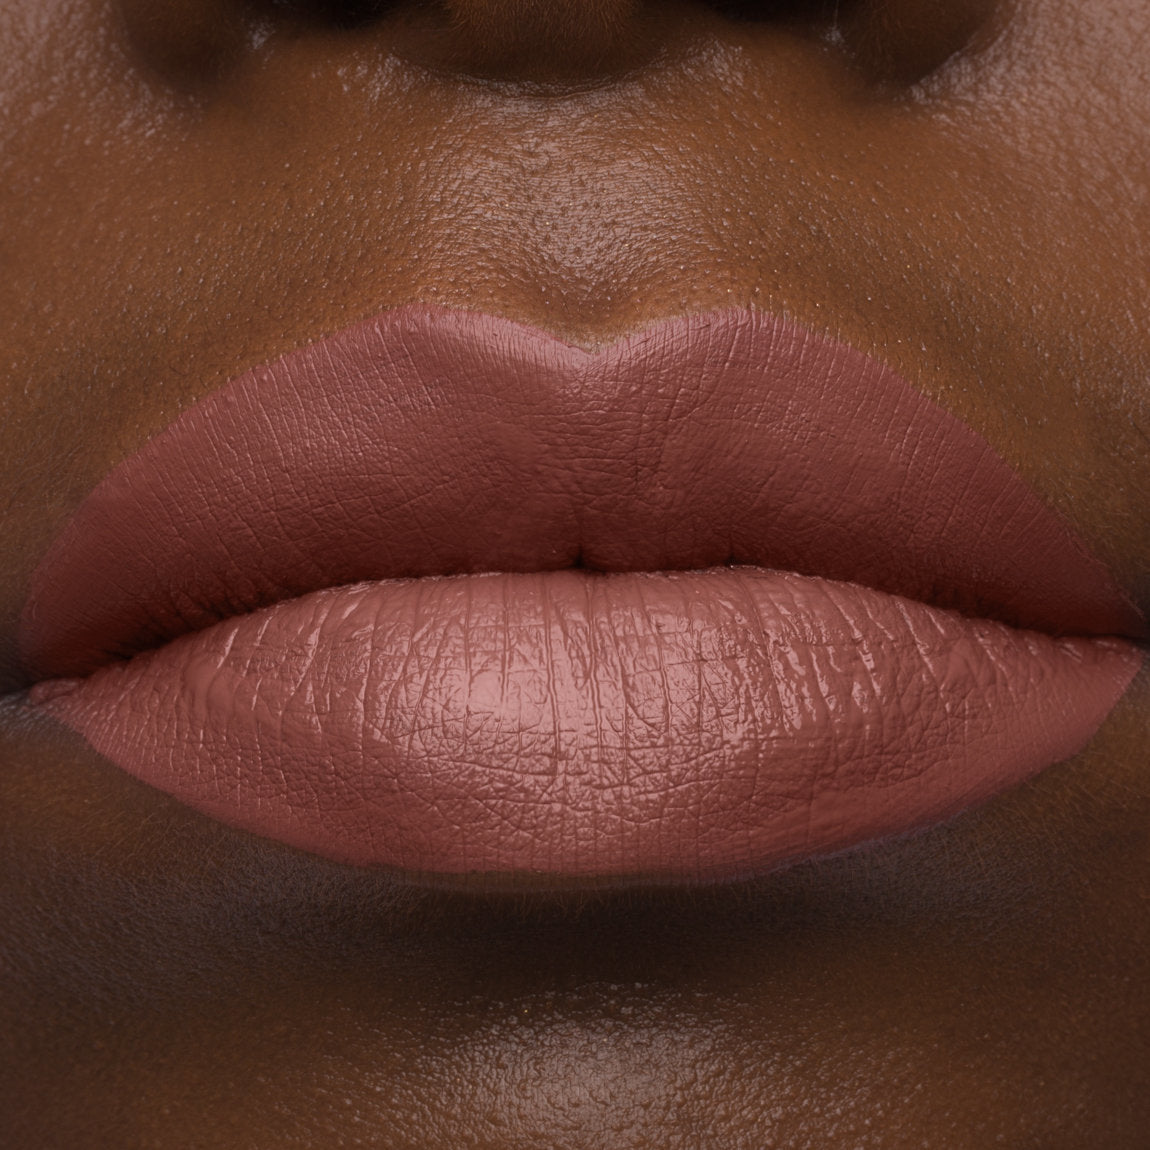 Jeffree Star Cosmetics Velour Liquid Lipstick-Family Jewels-Meharshop